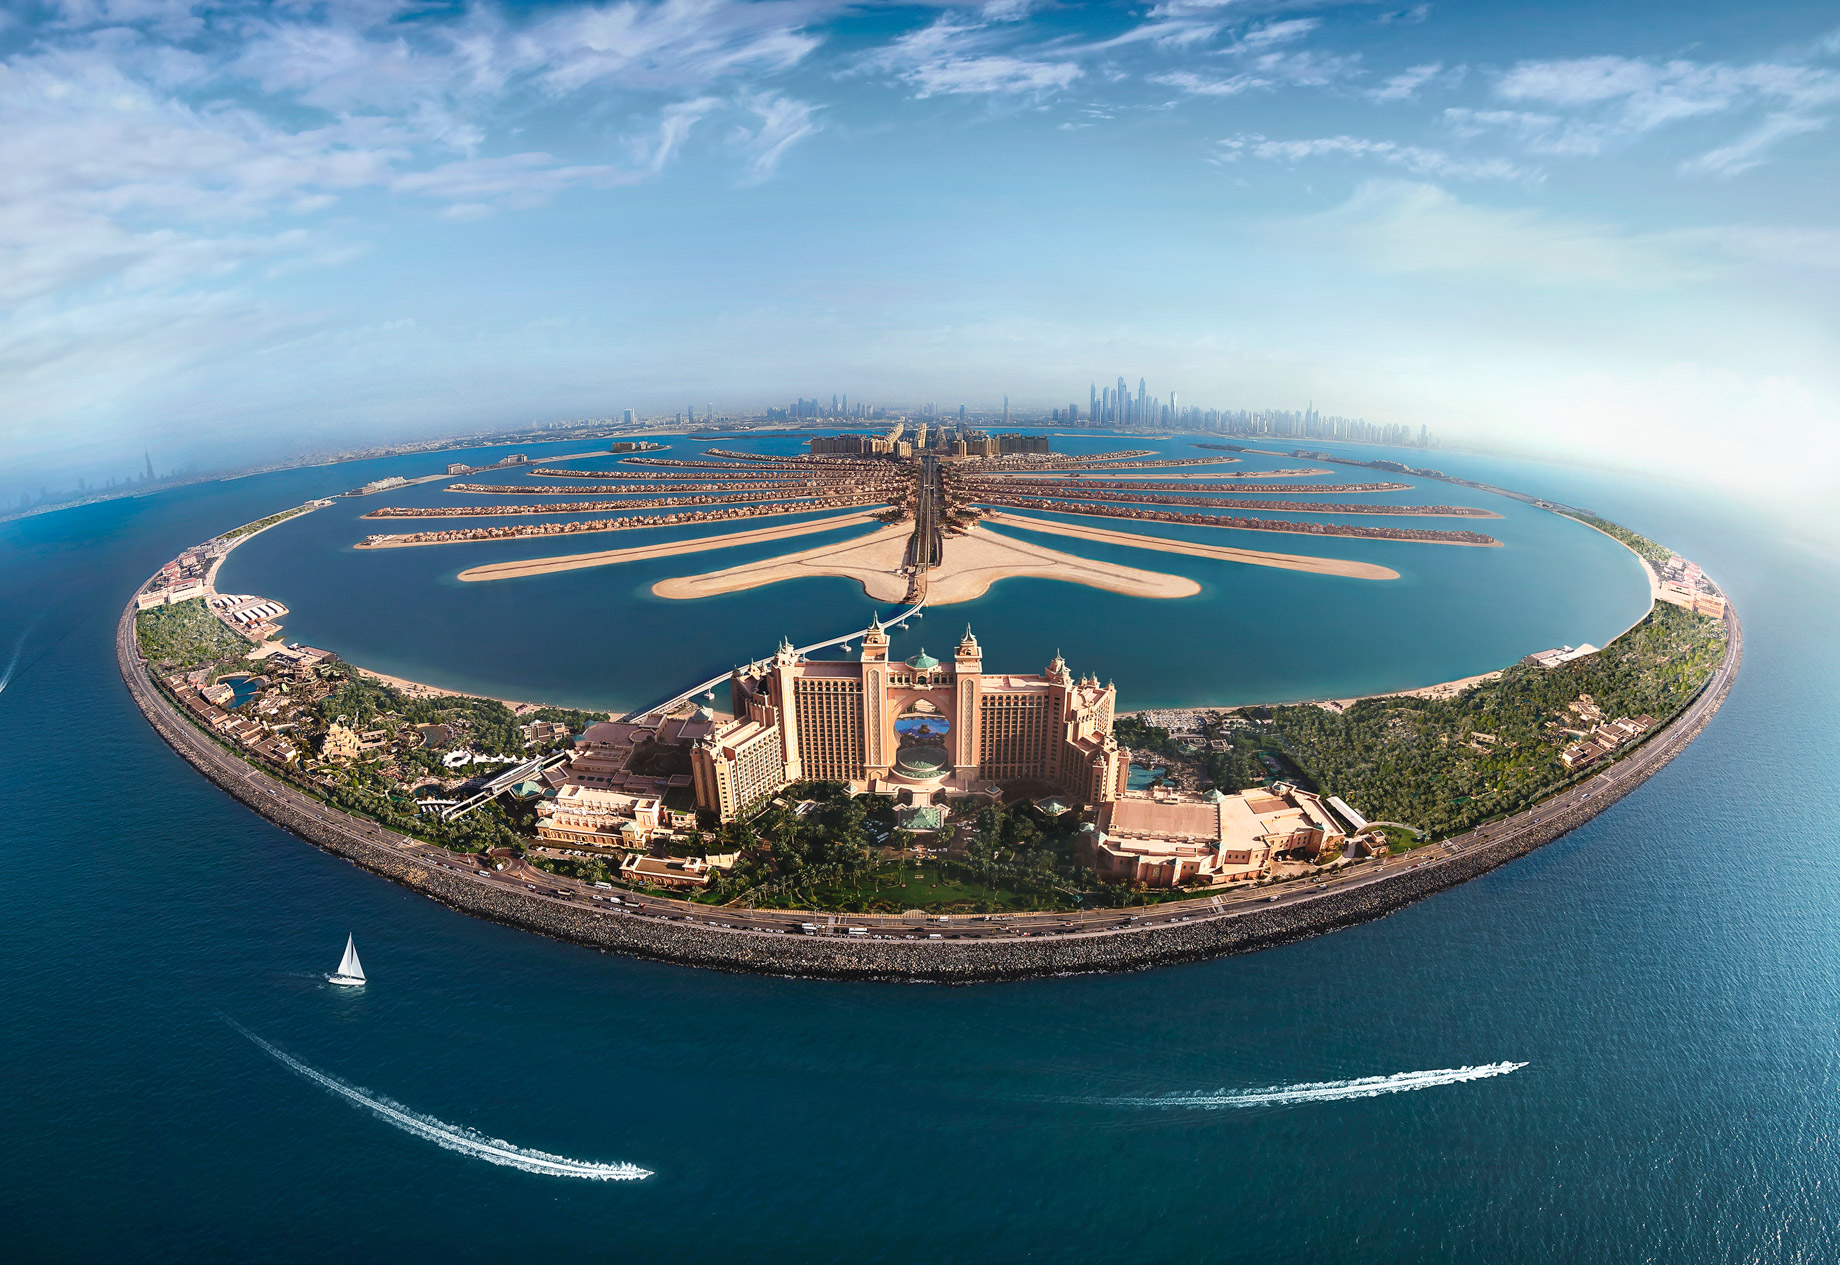 Atlantis The Palm Resort - Crescent Rd, Dubai, UAE